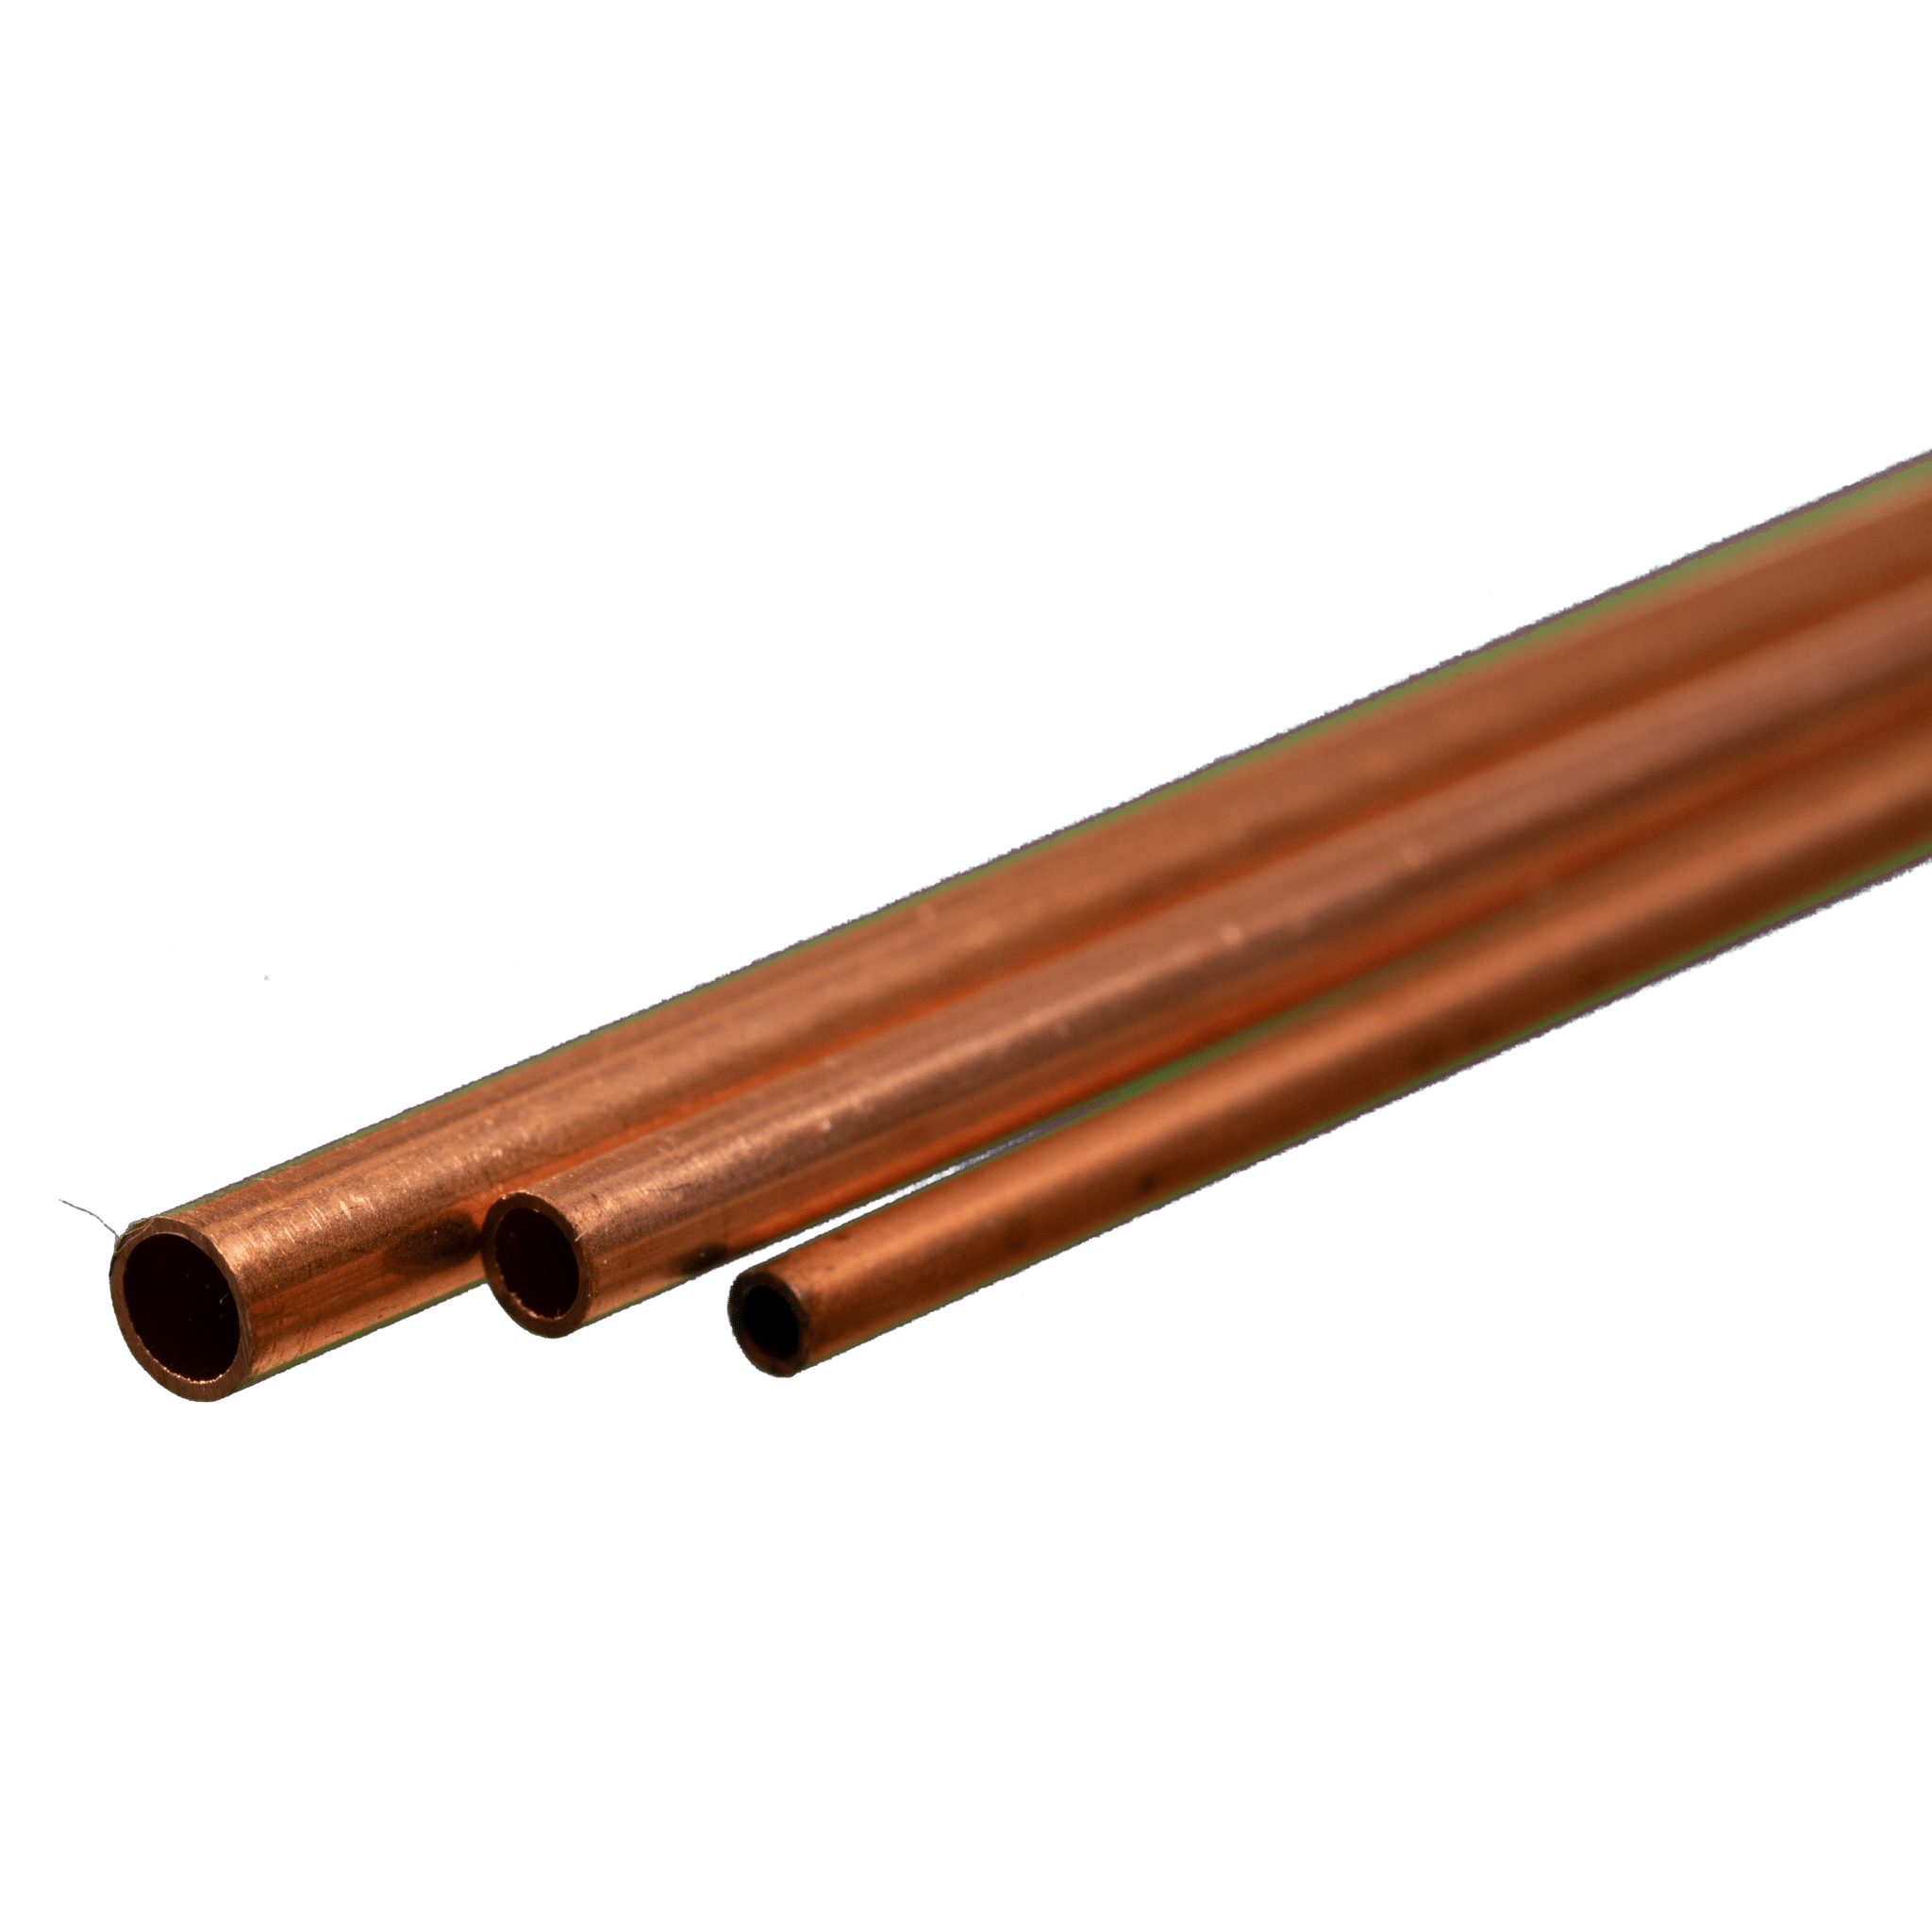 K&S Copper Tube 3/32 5/32 1/8 Bendable (3) 5077